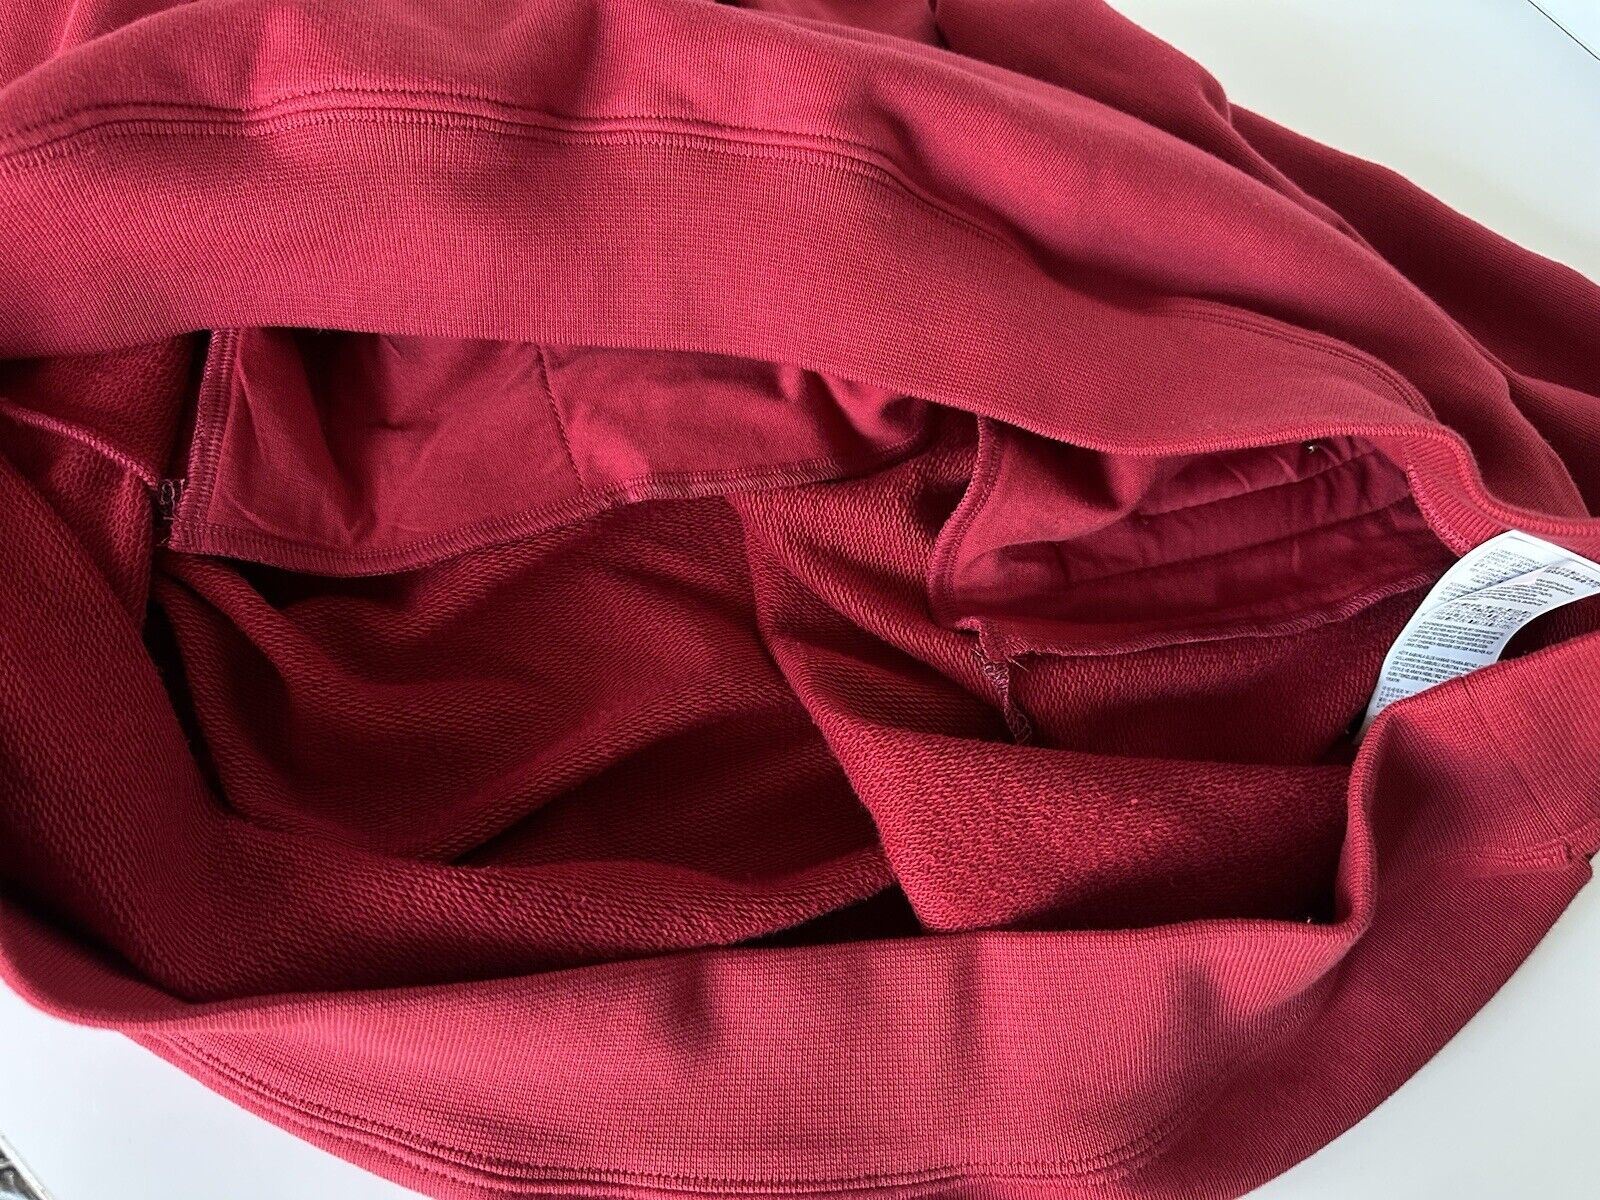 Neu mit Etikett: 750 $ Versace Medusa Print Rotes Baumwoll-Sweatshirt mit Kapuze 5XL A89514S IT 